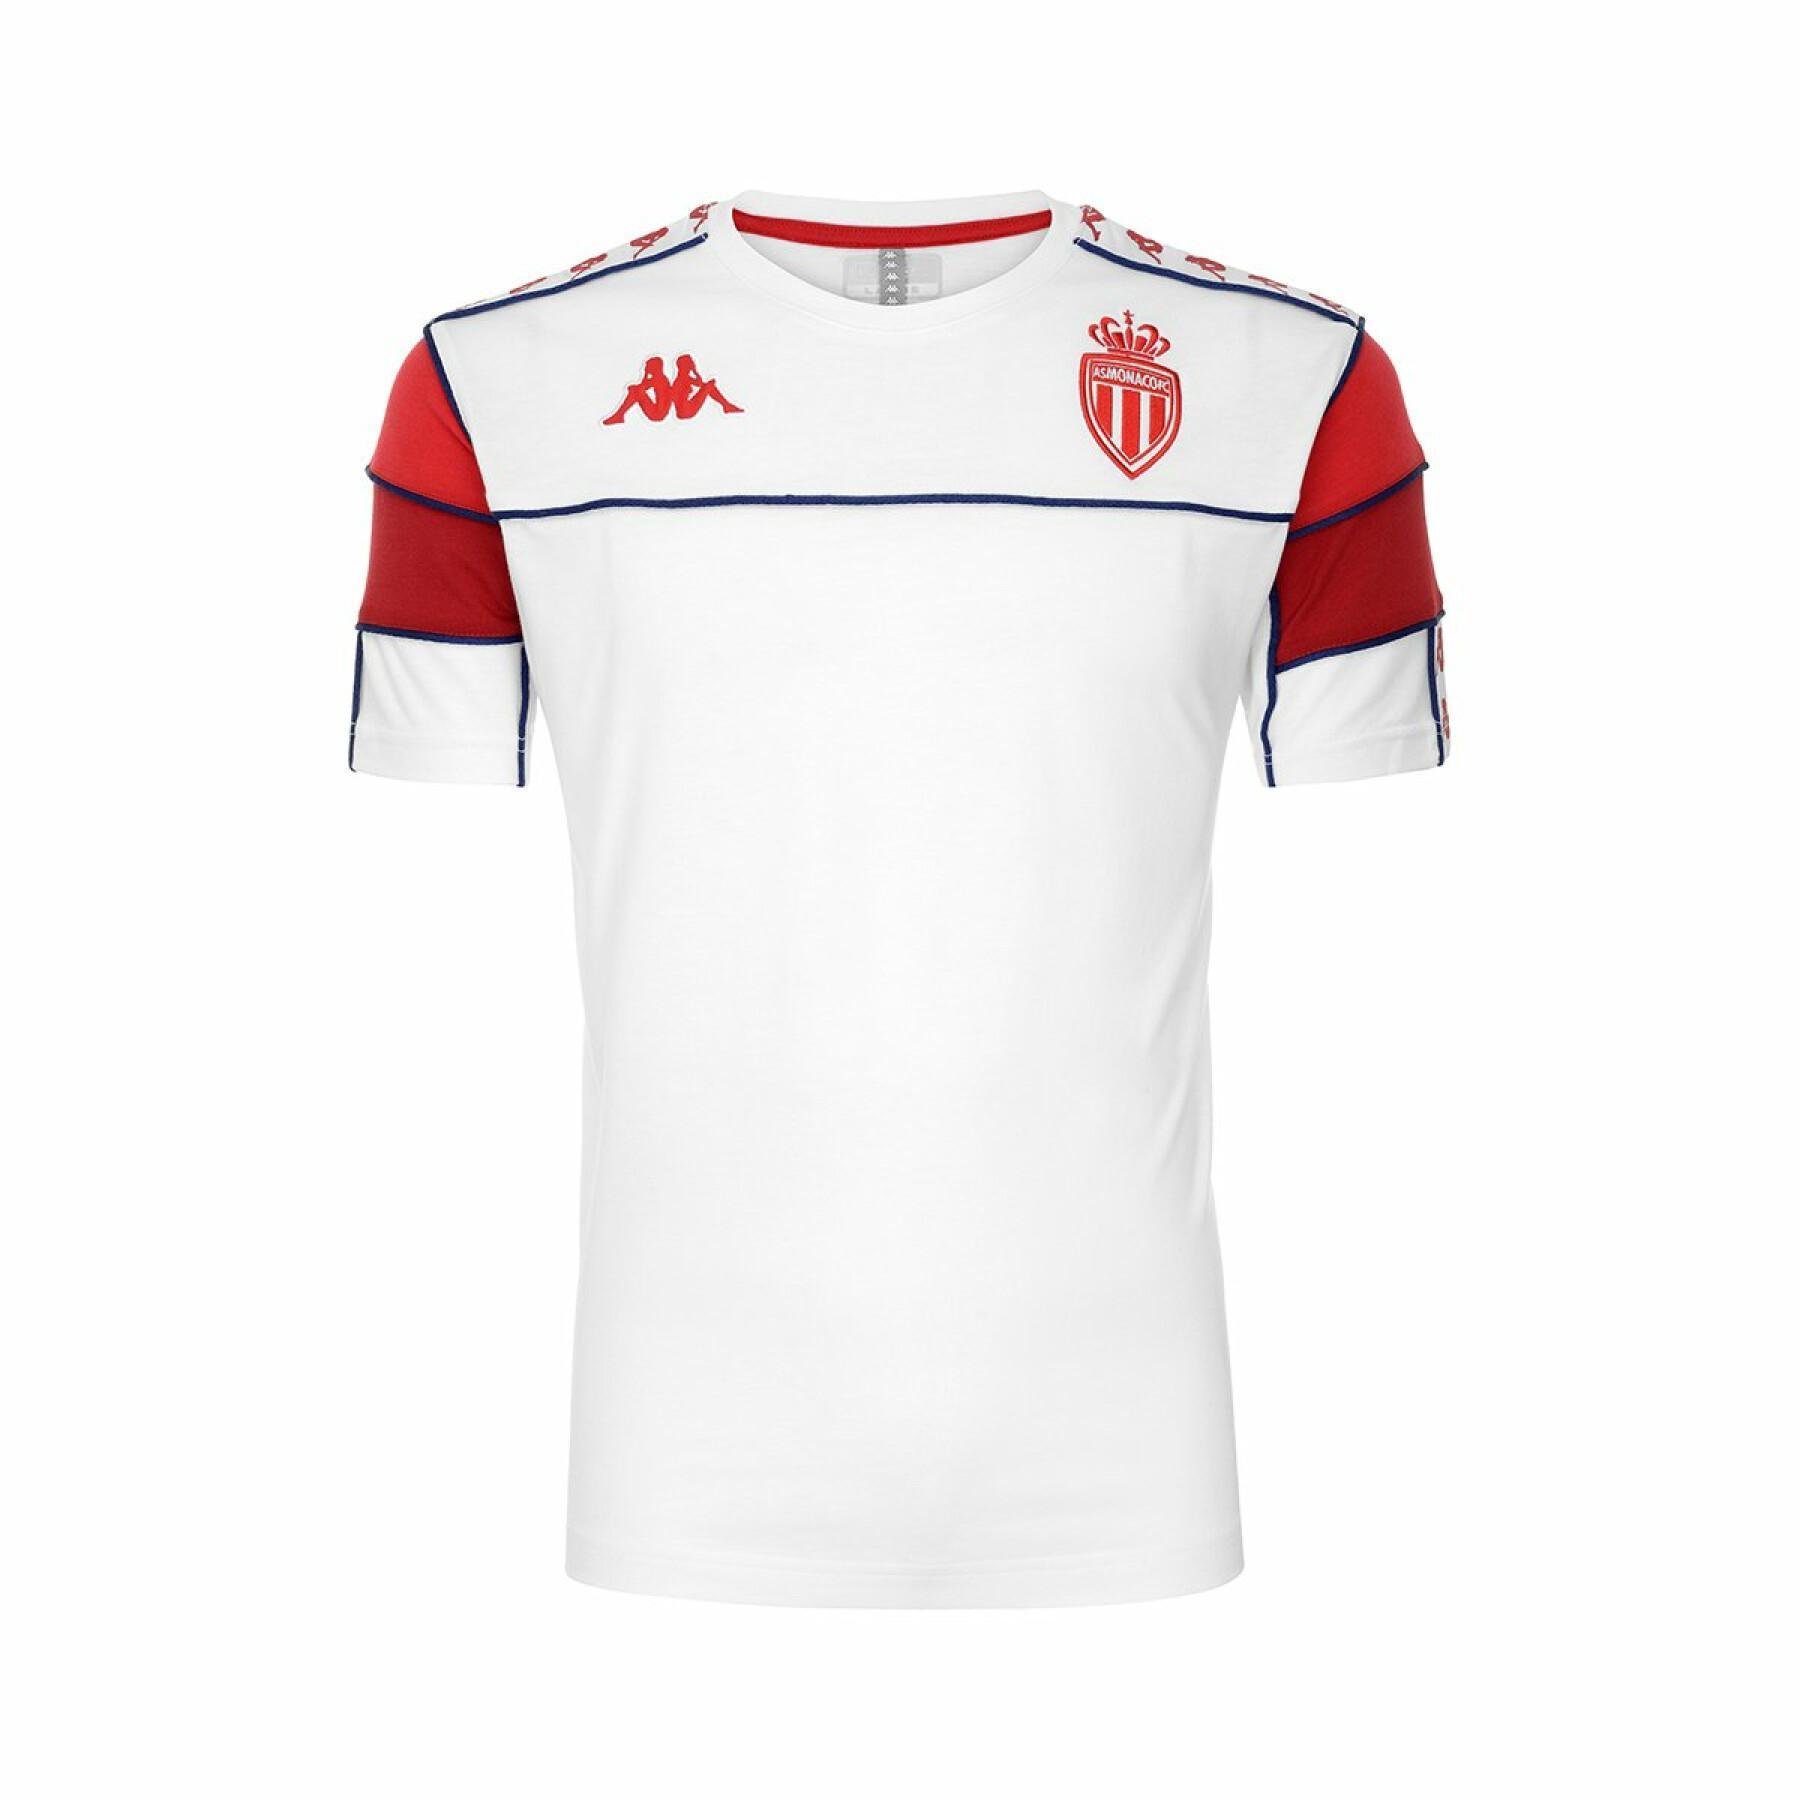 T-shirt criança AS Monaco 2021/22 222 banda arari slim